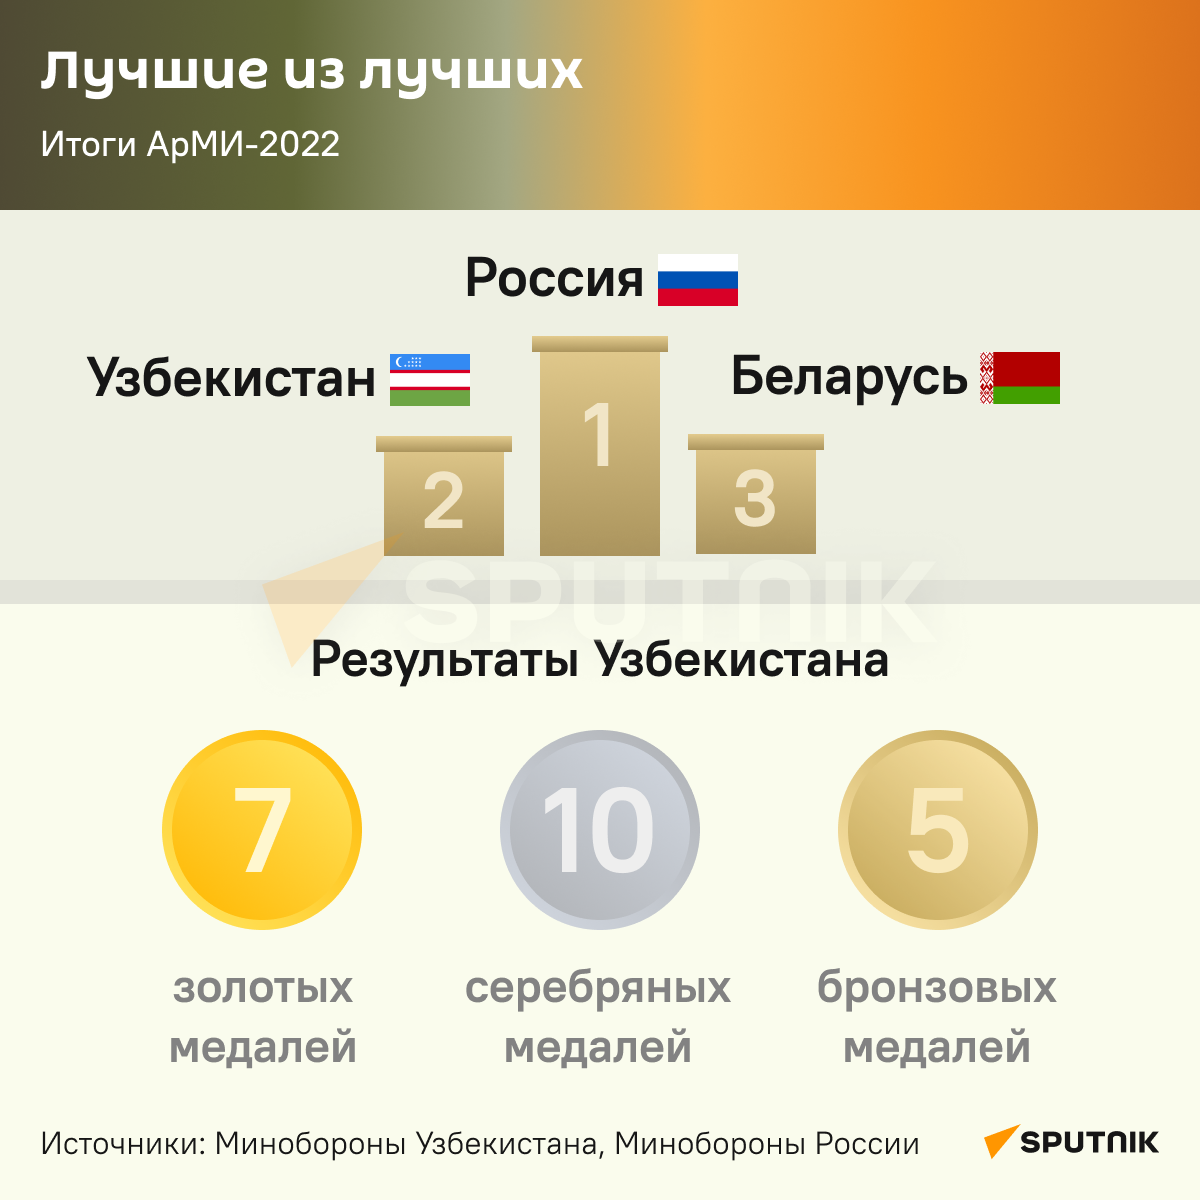 Итоги АрМИ-2022 инфографика - Sputnik Узбекистан